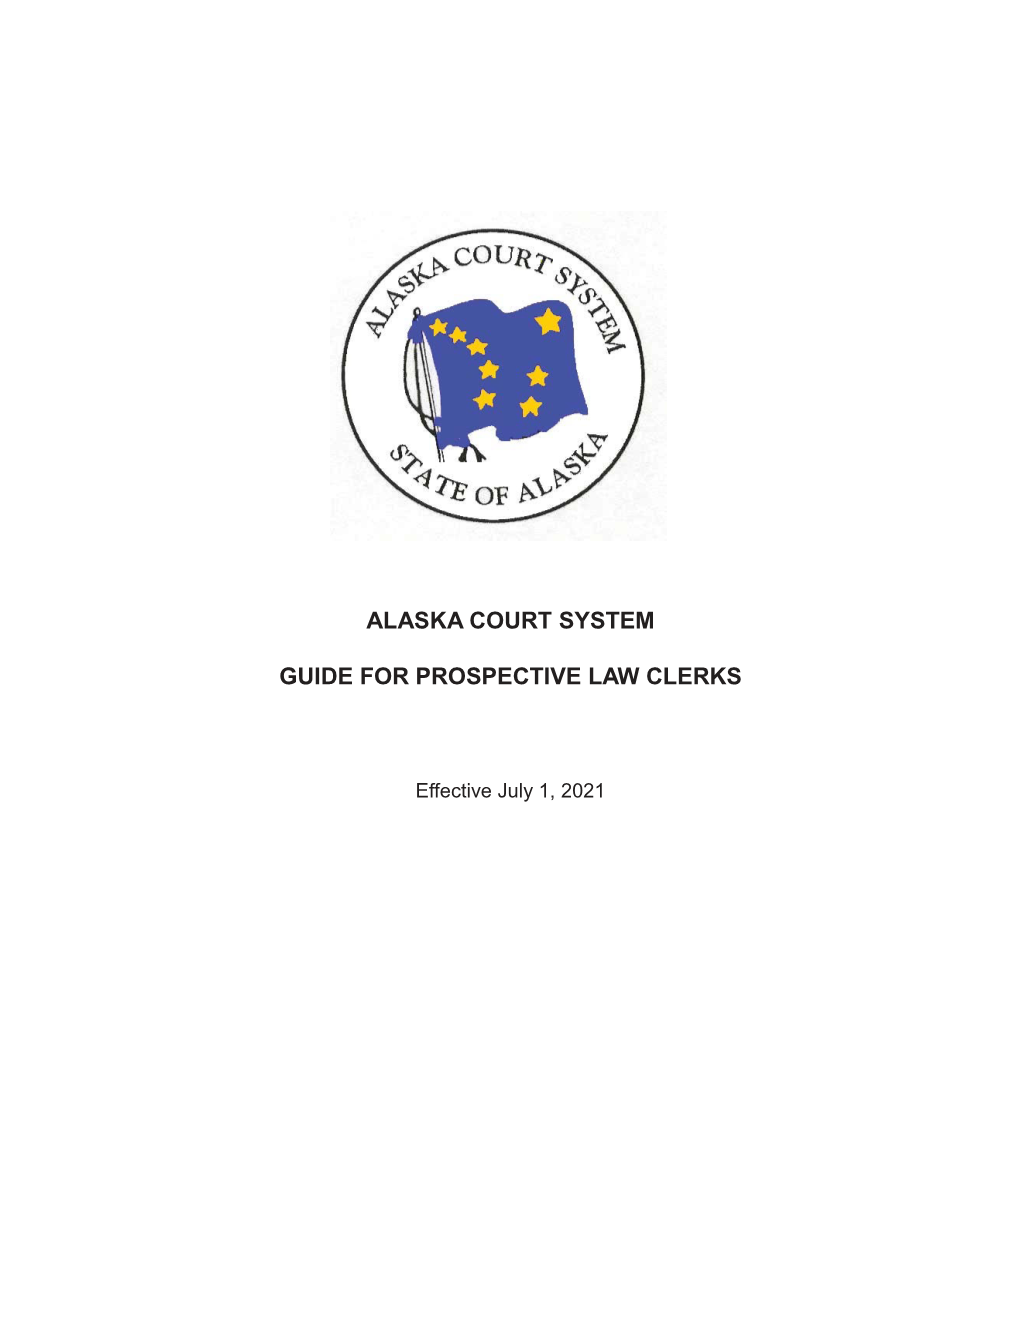 General Information for Prospective Law Clerks – Effective July 1, 2021